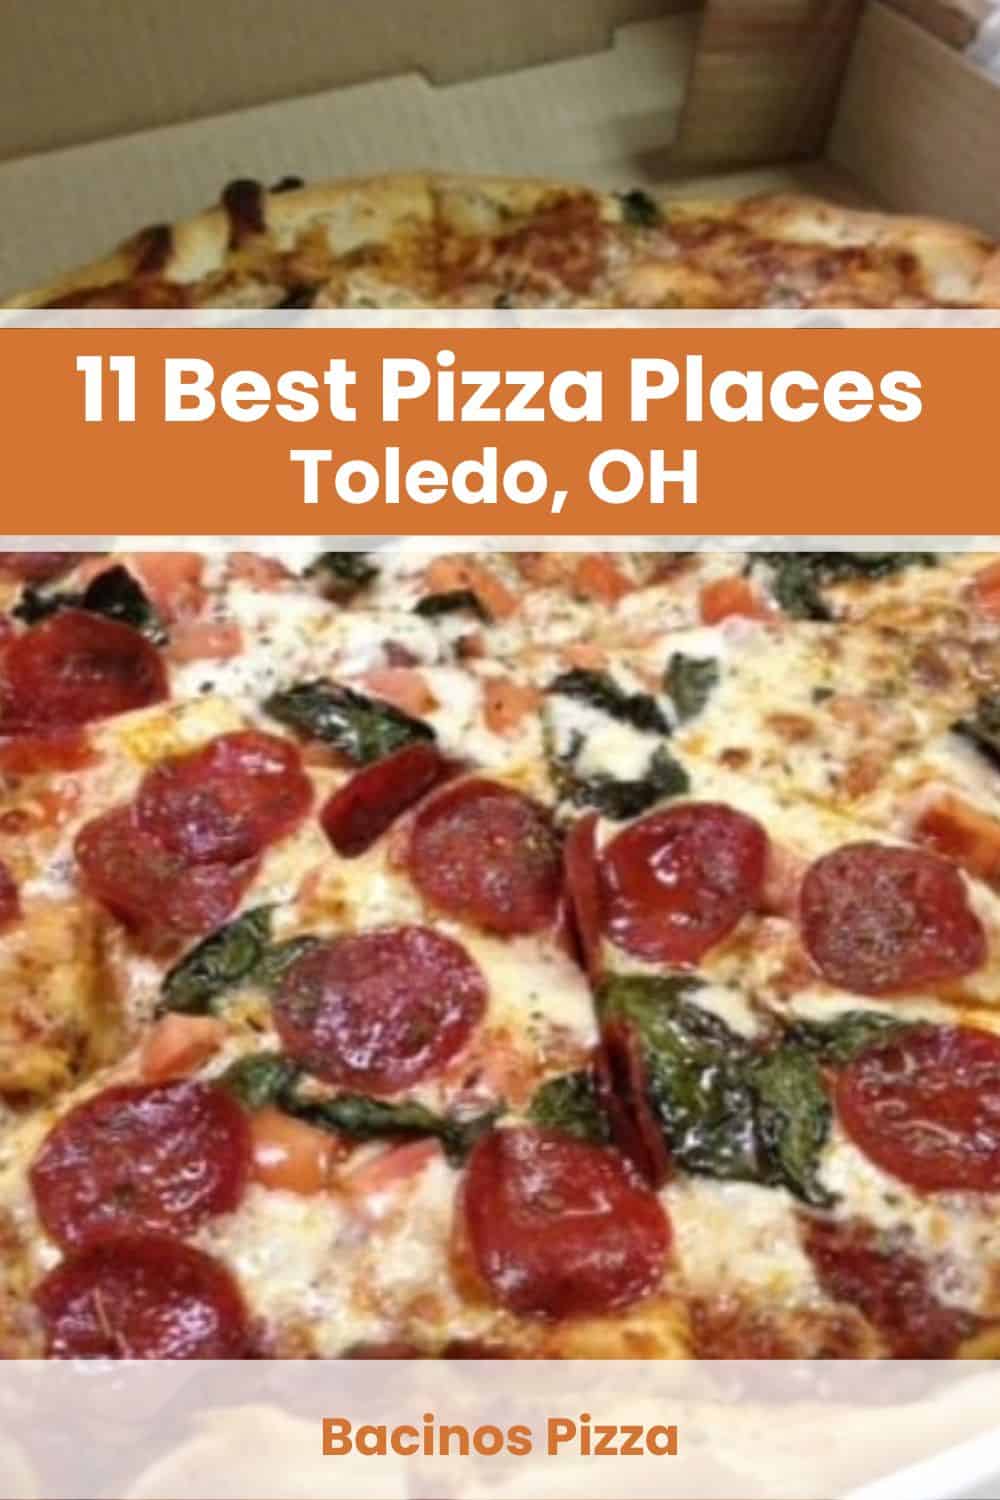 Pizza Places in Toledo